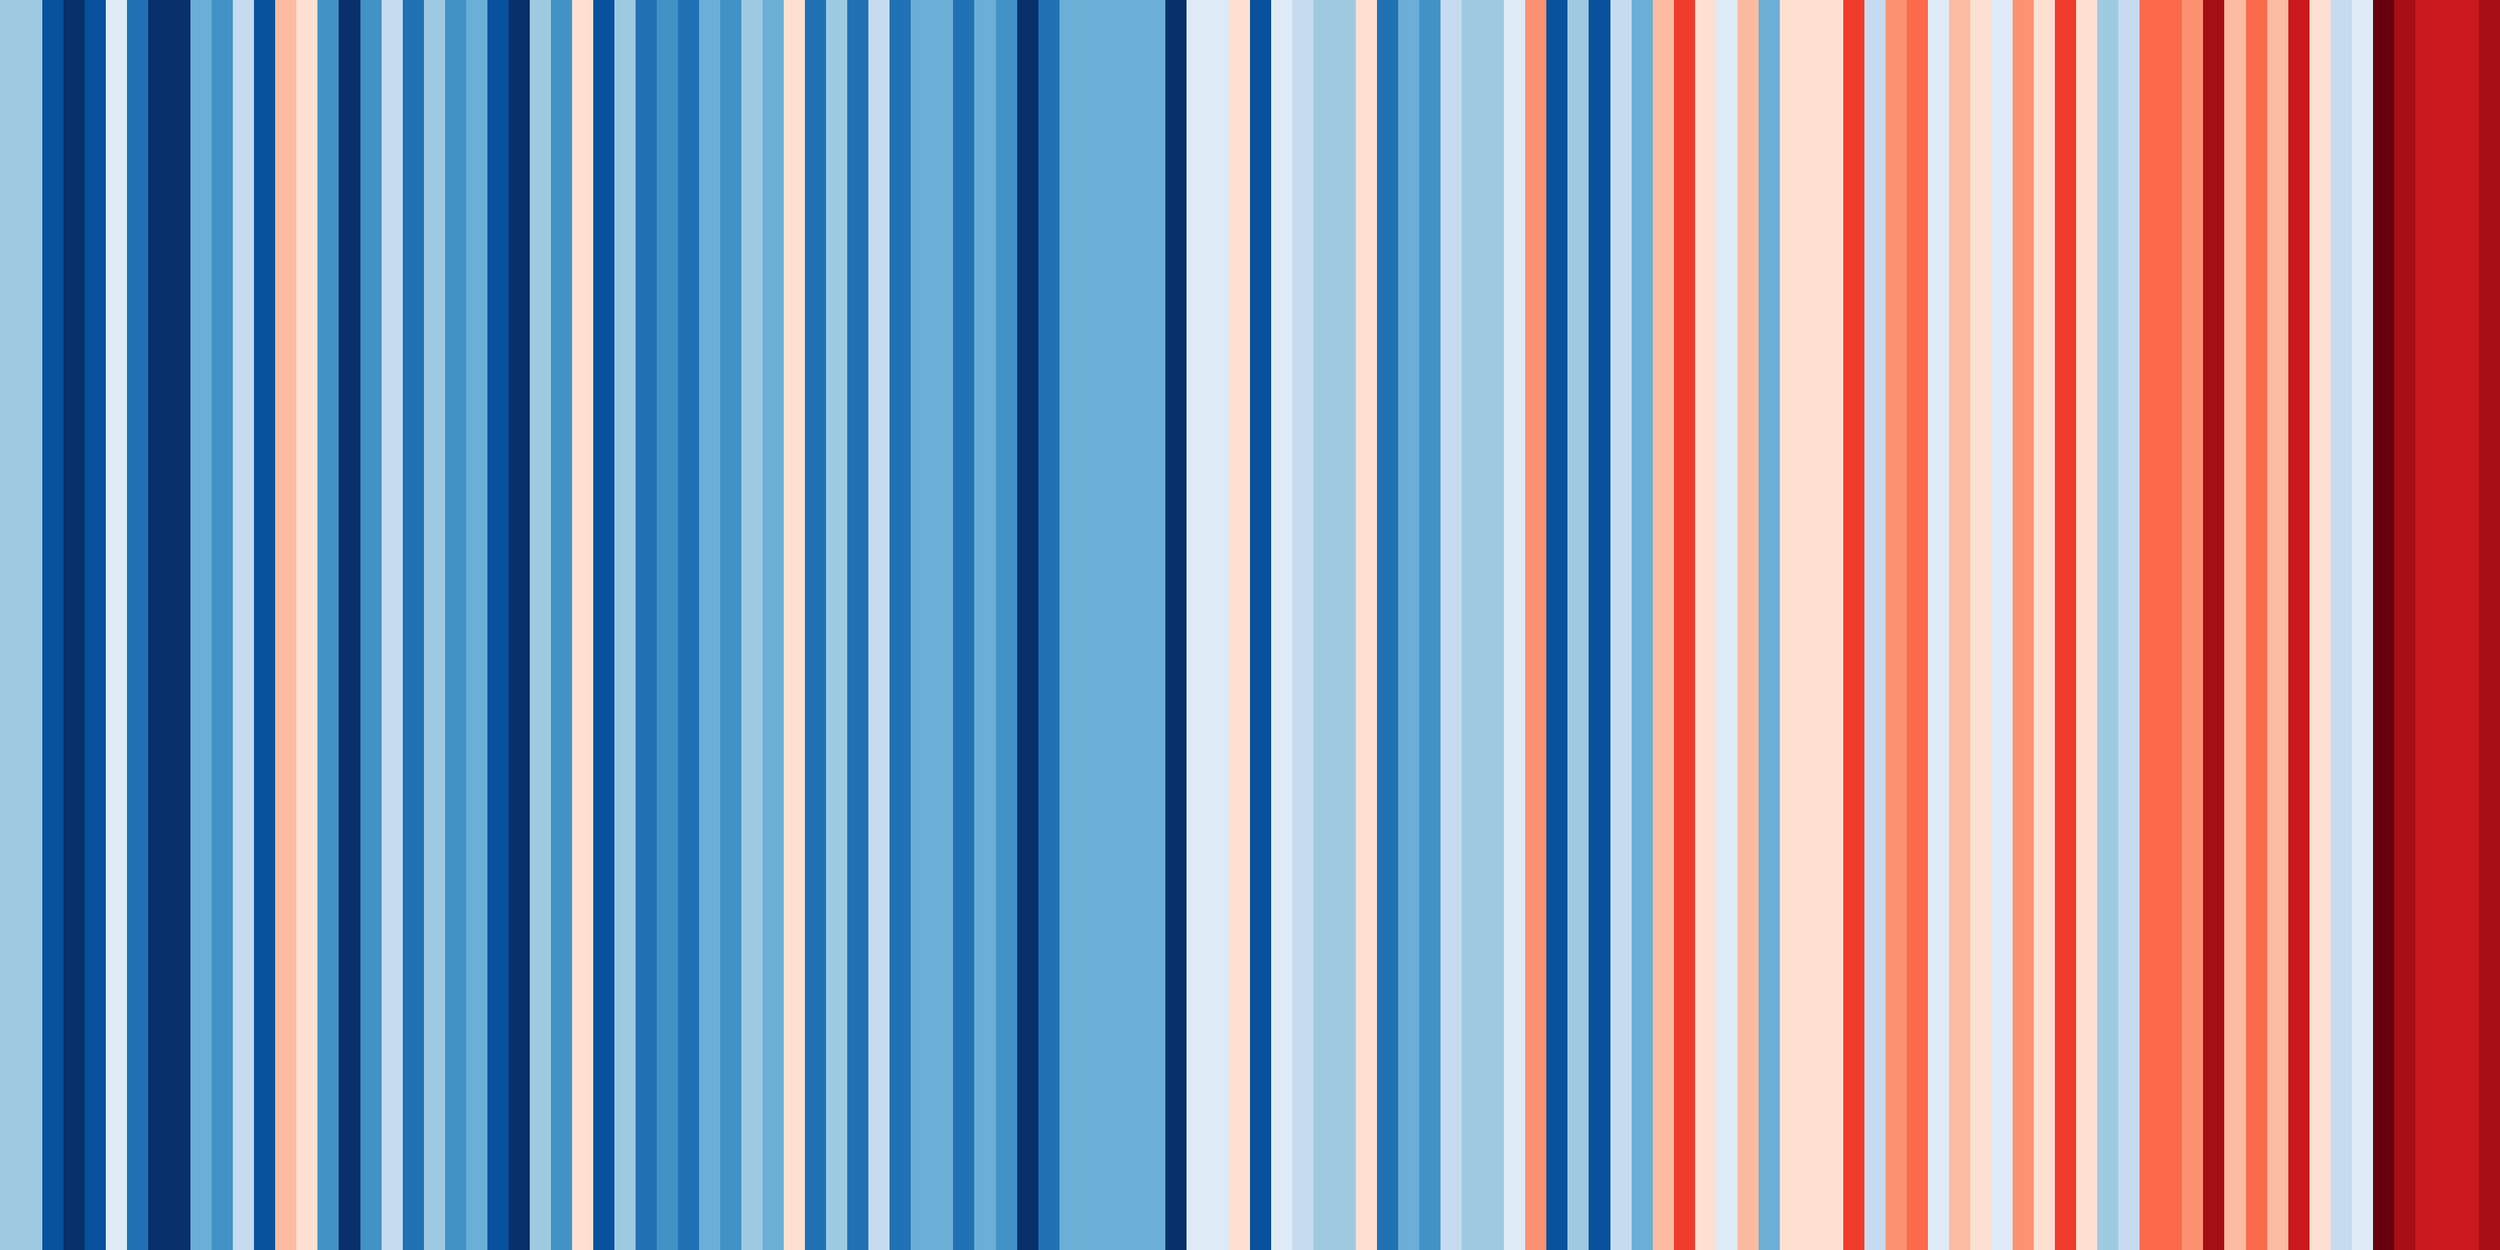 Australian temperatures over the last 100 years